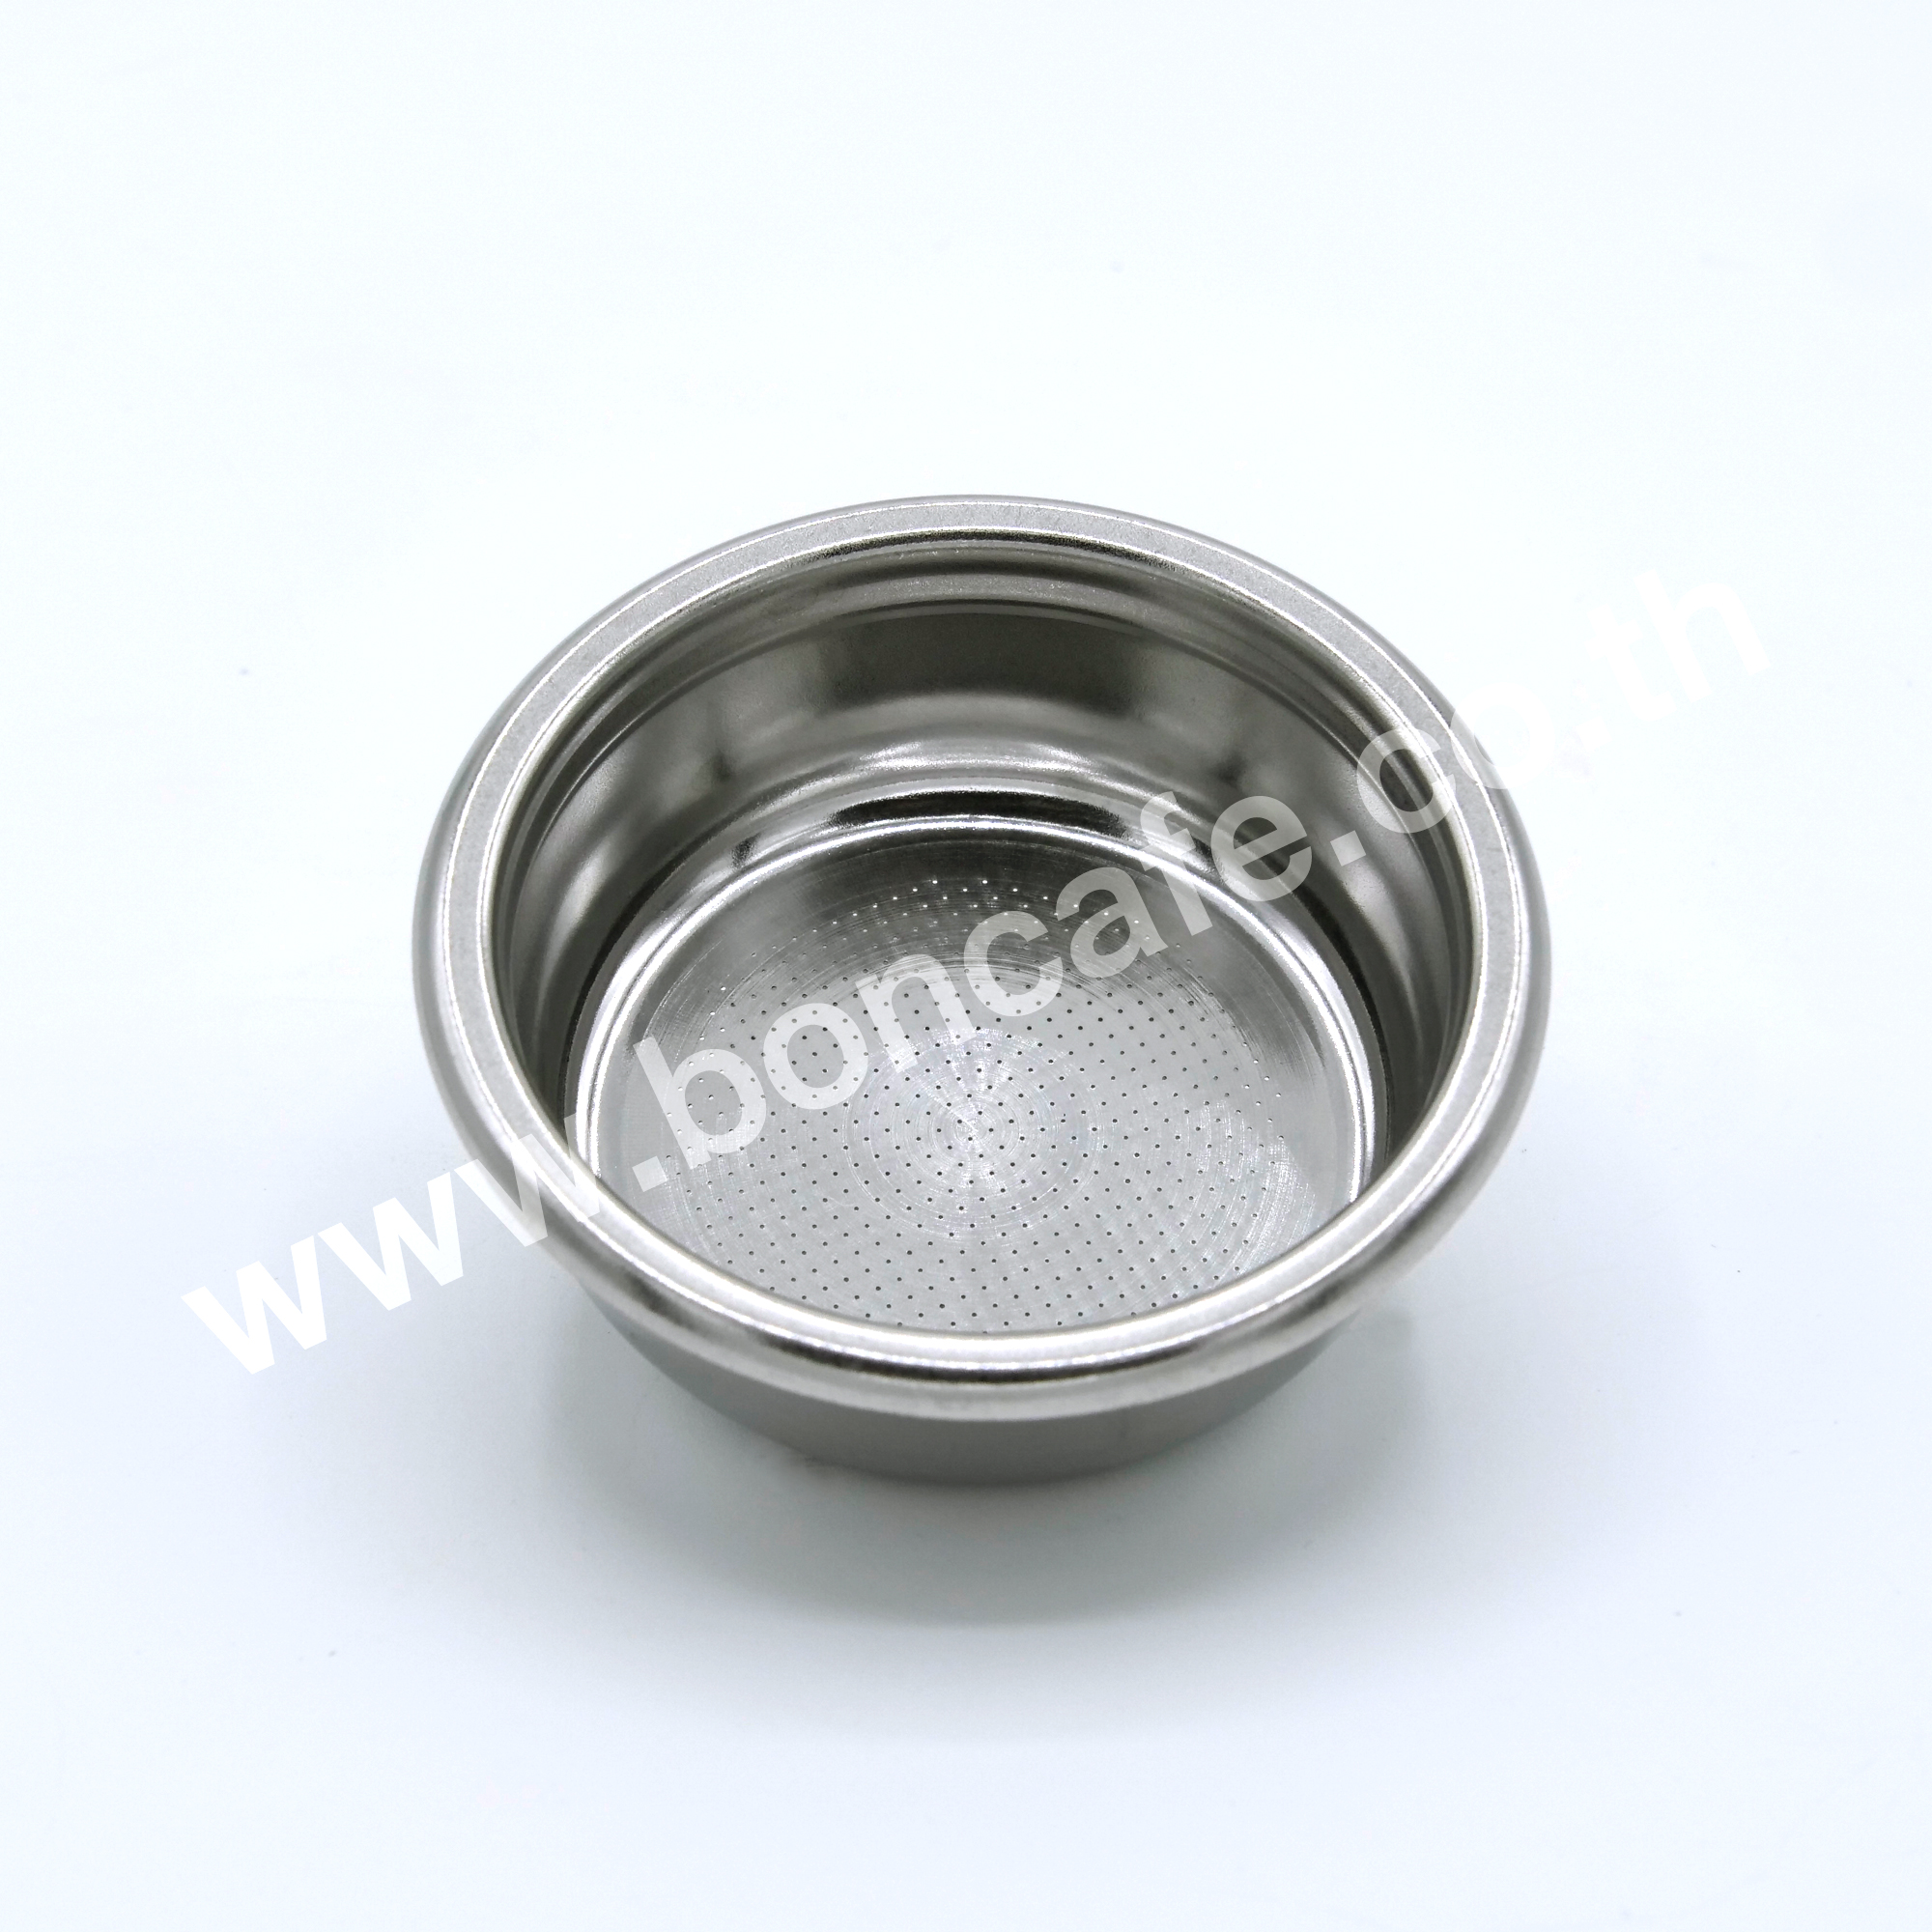 1.-Ascosa-2-Cups-filter-14gr.-(Steel-BarBarista-Pro)